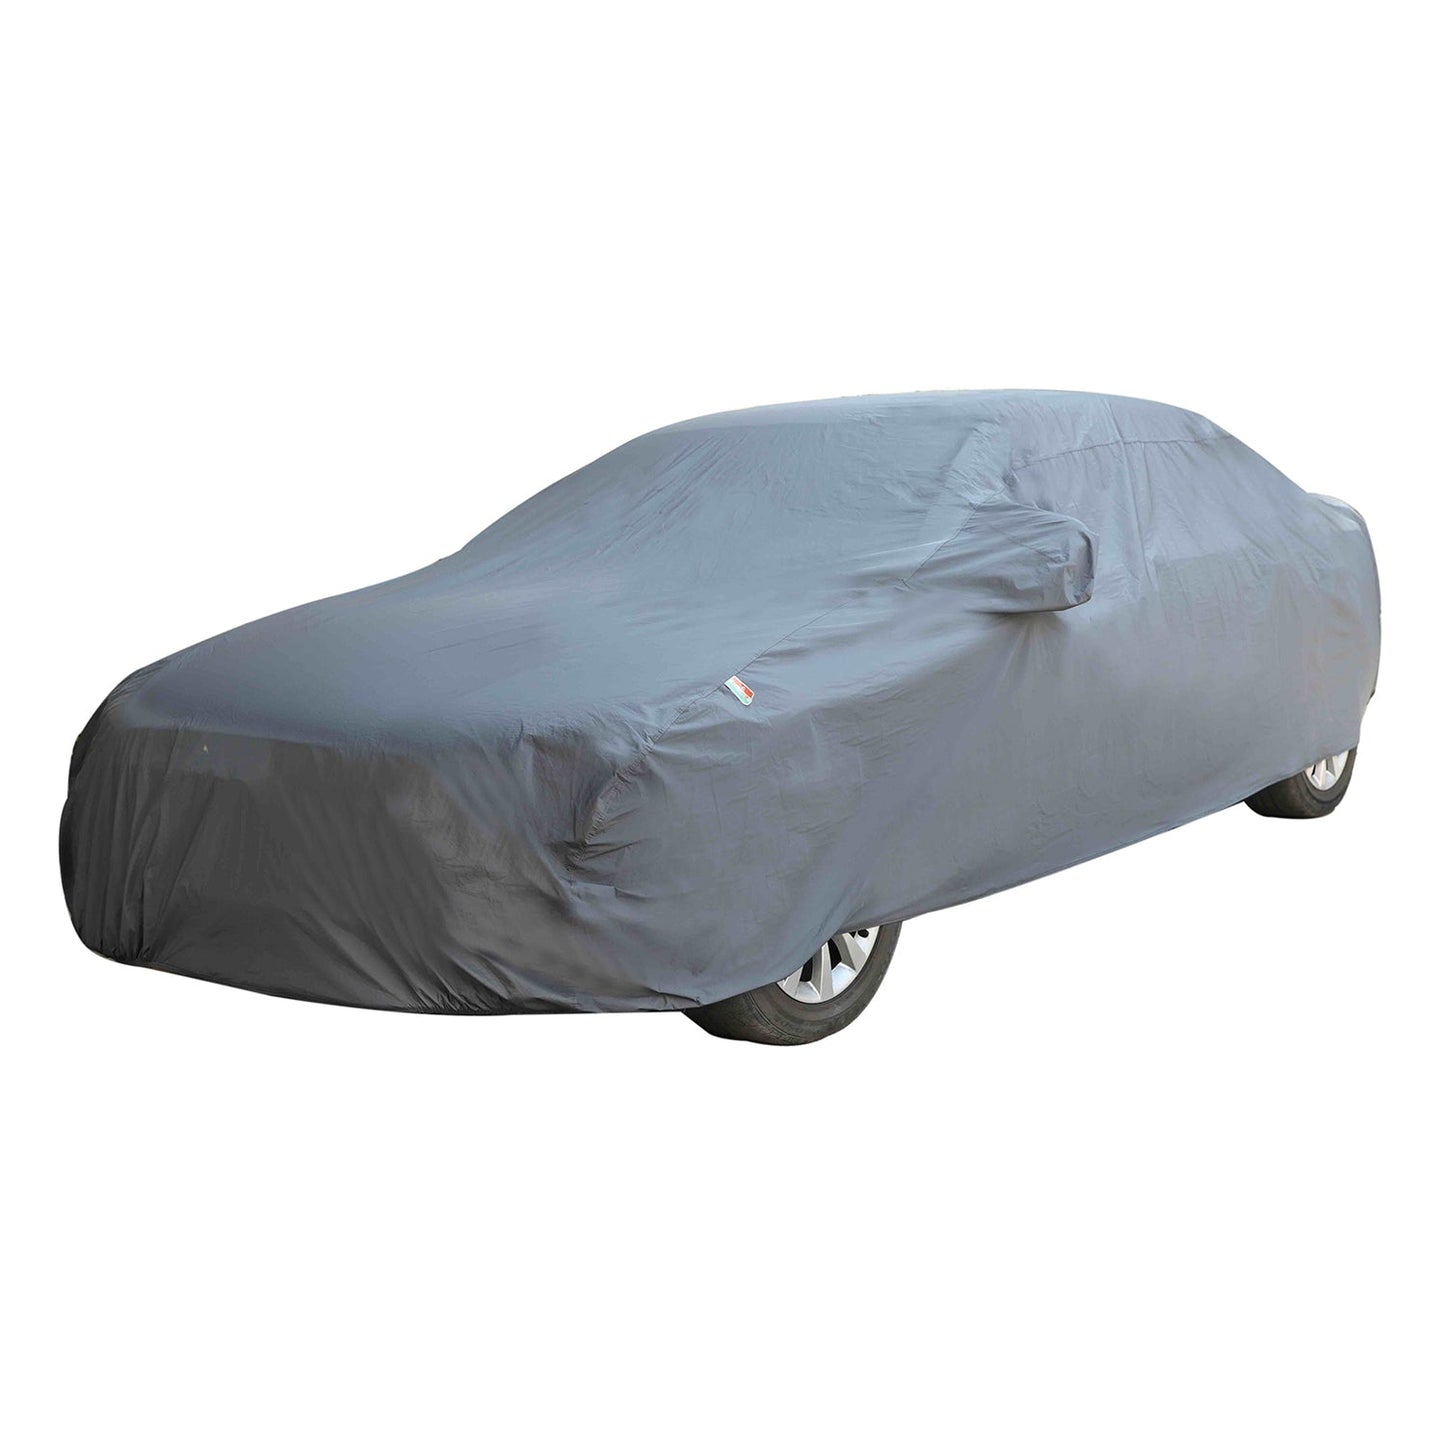 Oshotto Dark Grey 100% Anti Reflective, dustproof and Water Proof Car Body Cover with Mirror Pocket For Maruti Suzuki Sx4